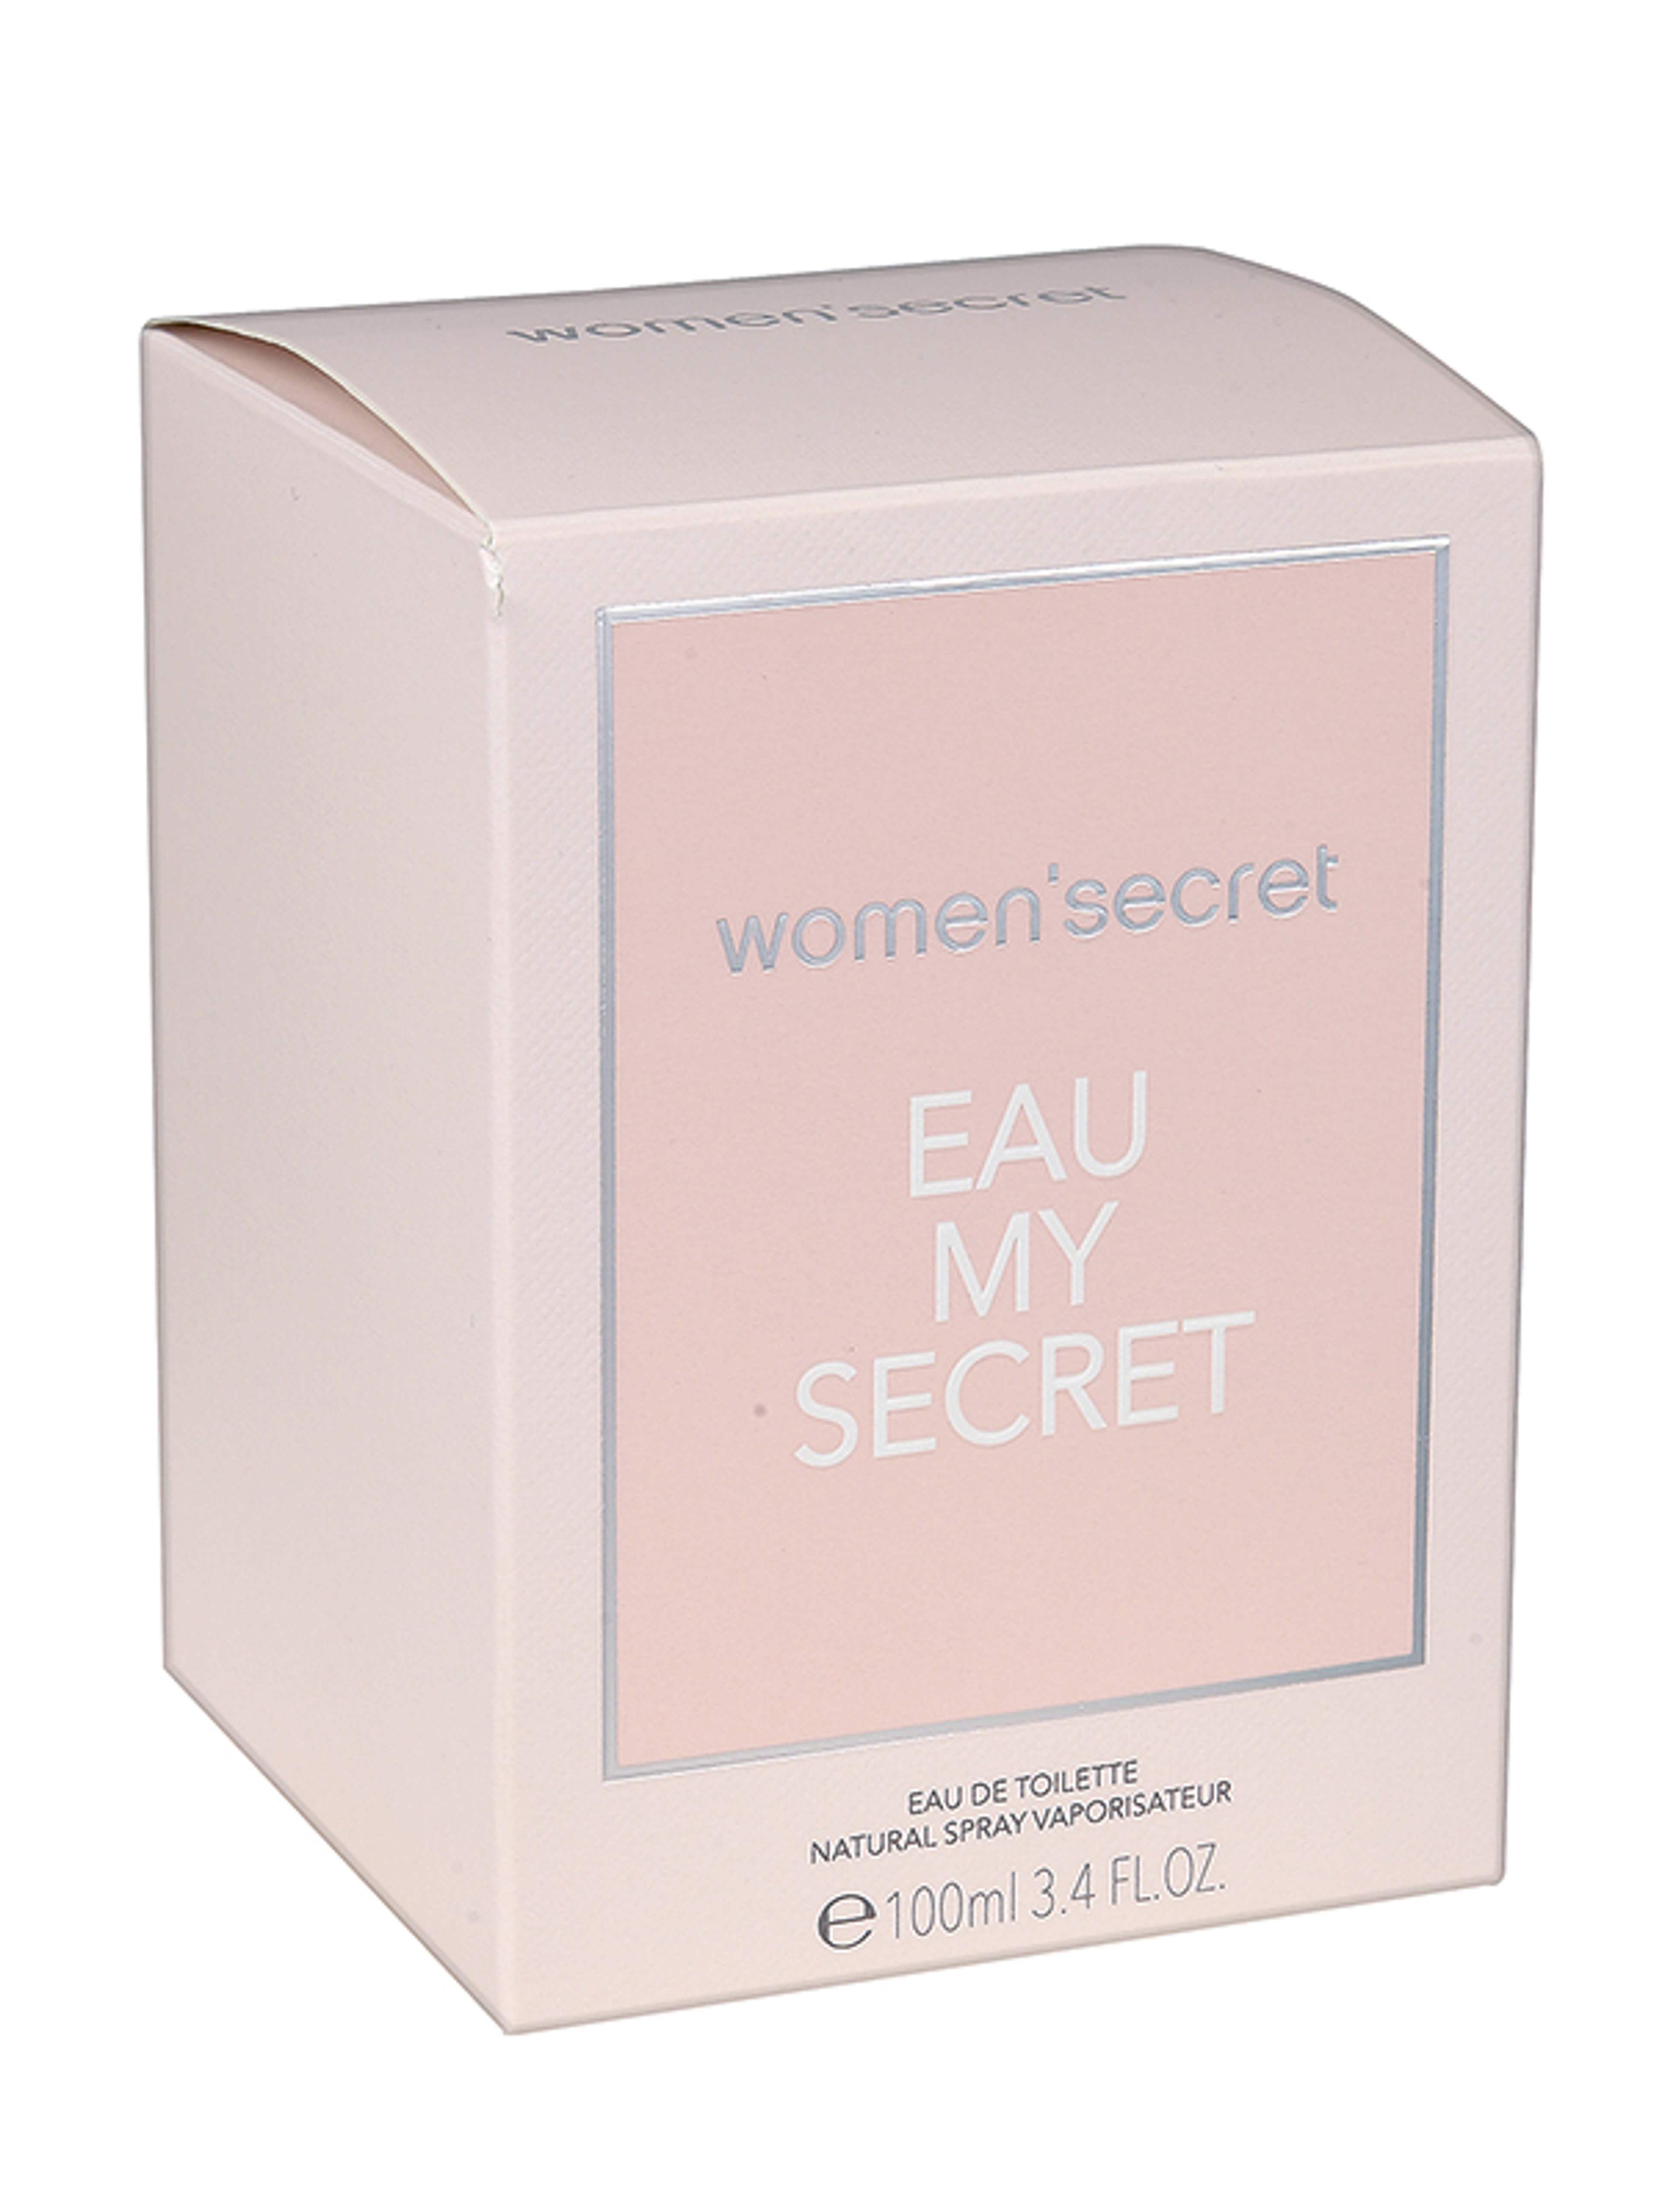 Women'secret Eau My Secret Eau de Toilette - 100 ml